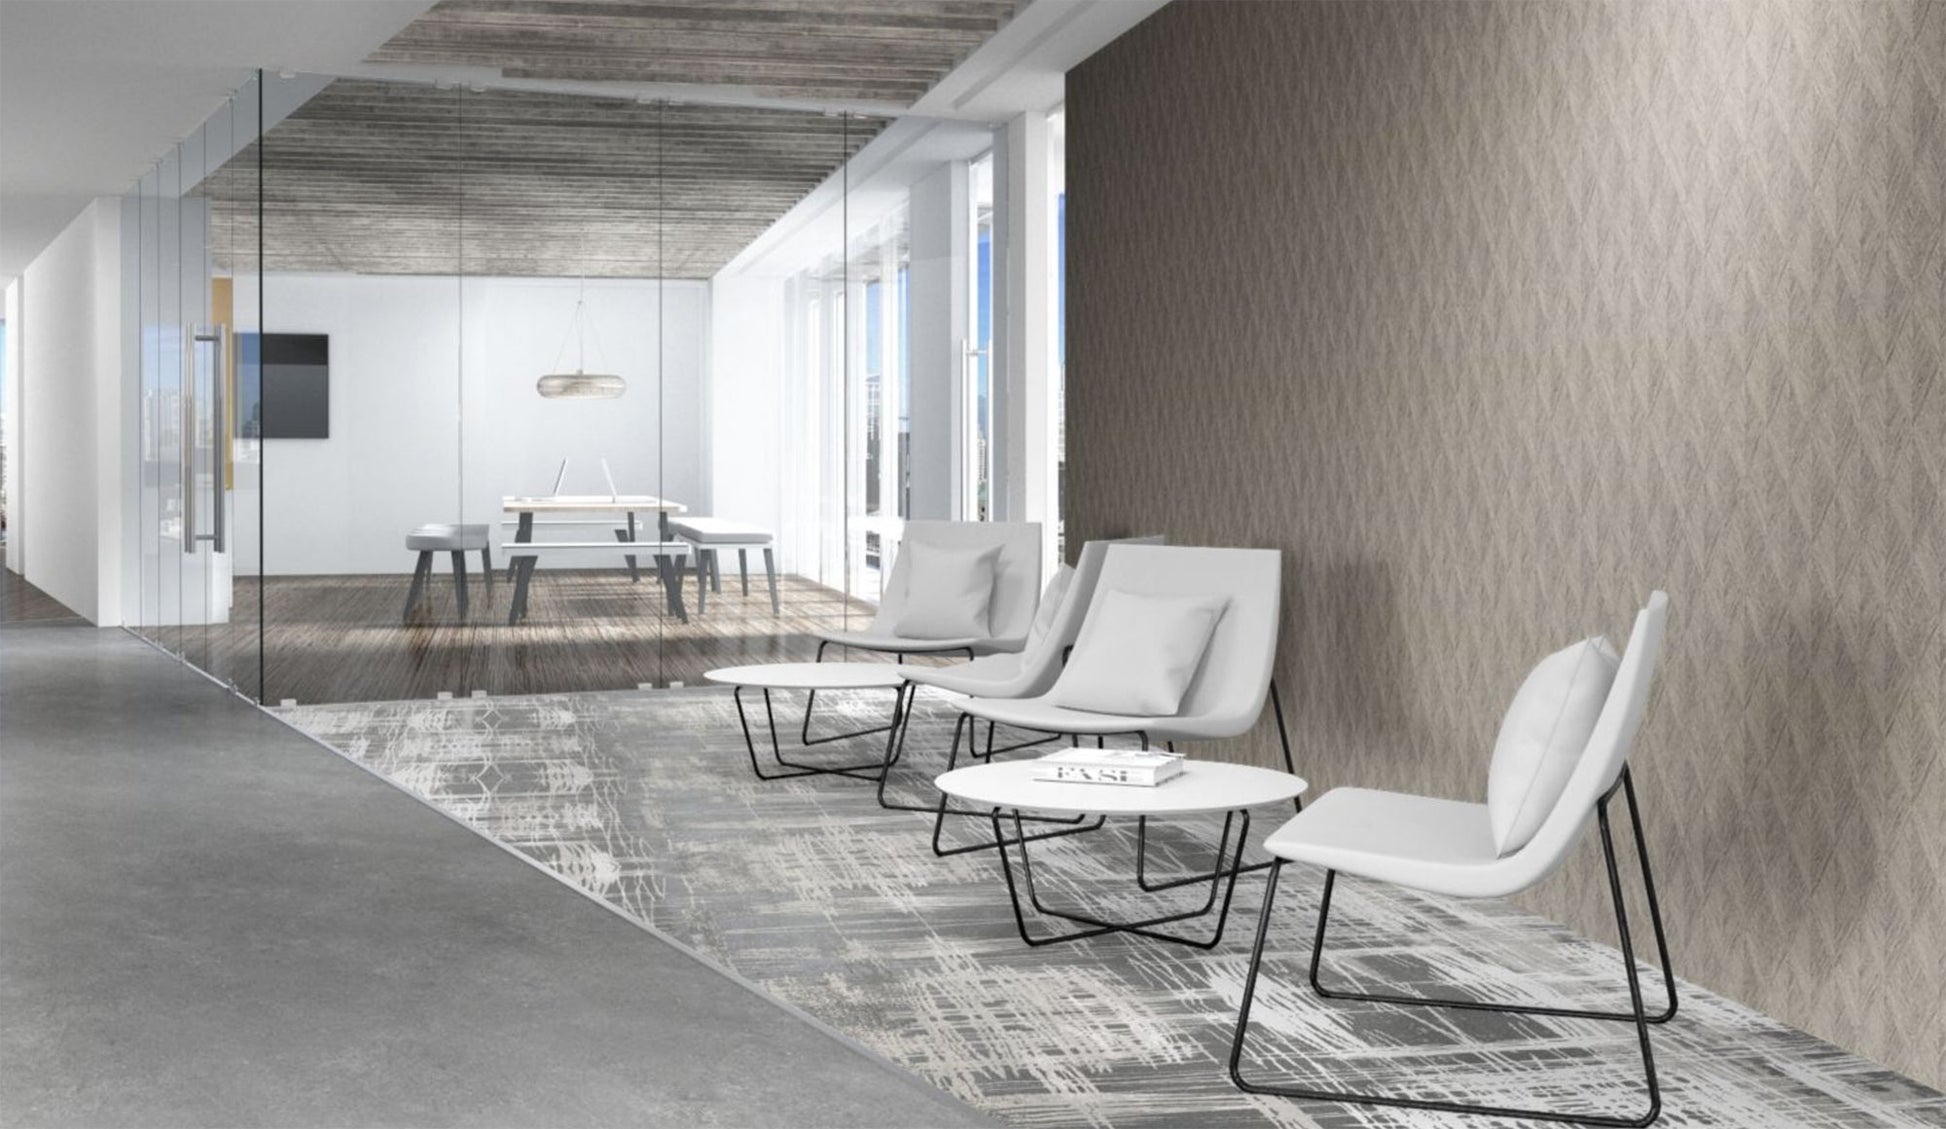 Louis Vuitton Inspired Wallpaper Design in Magodo - Home